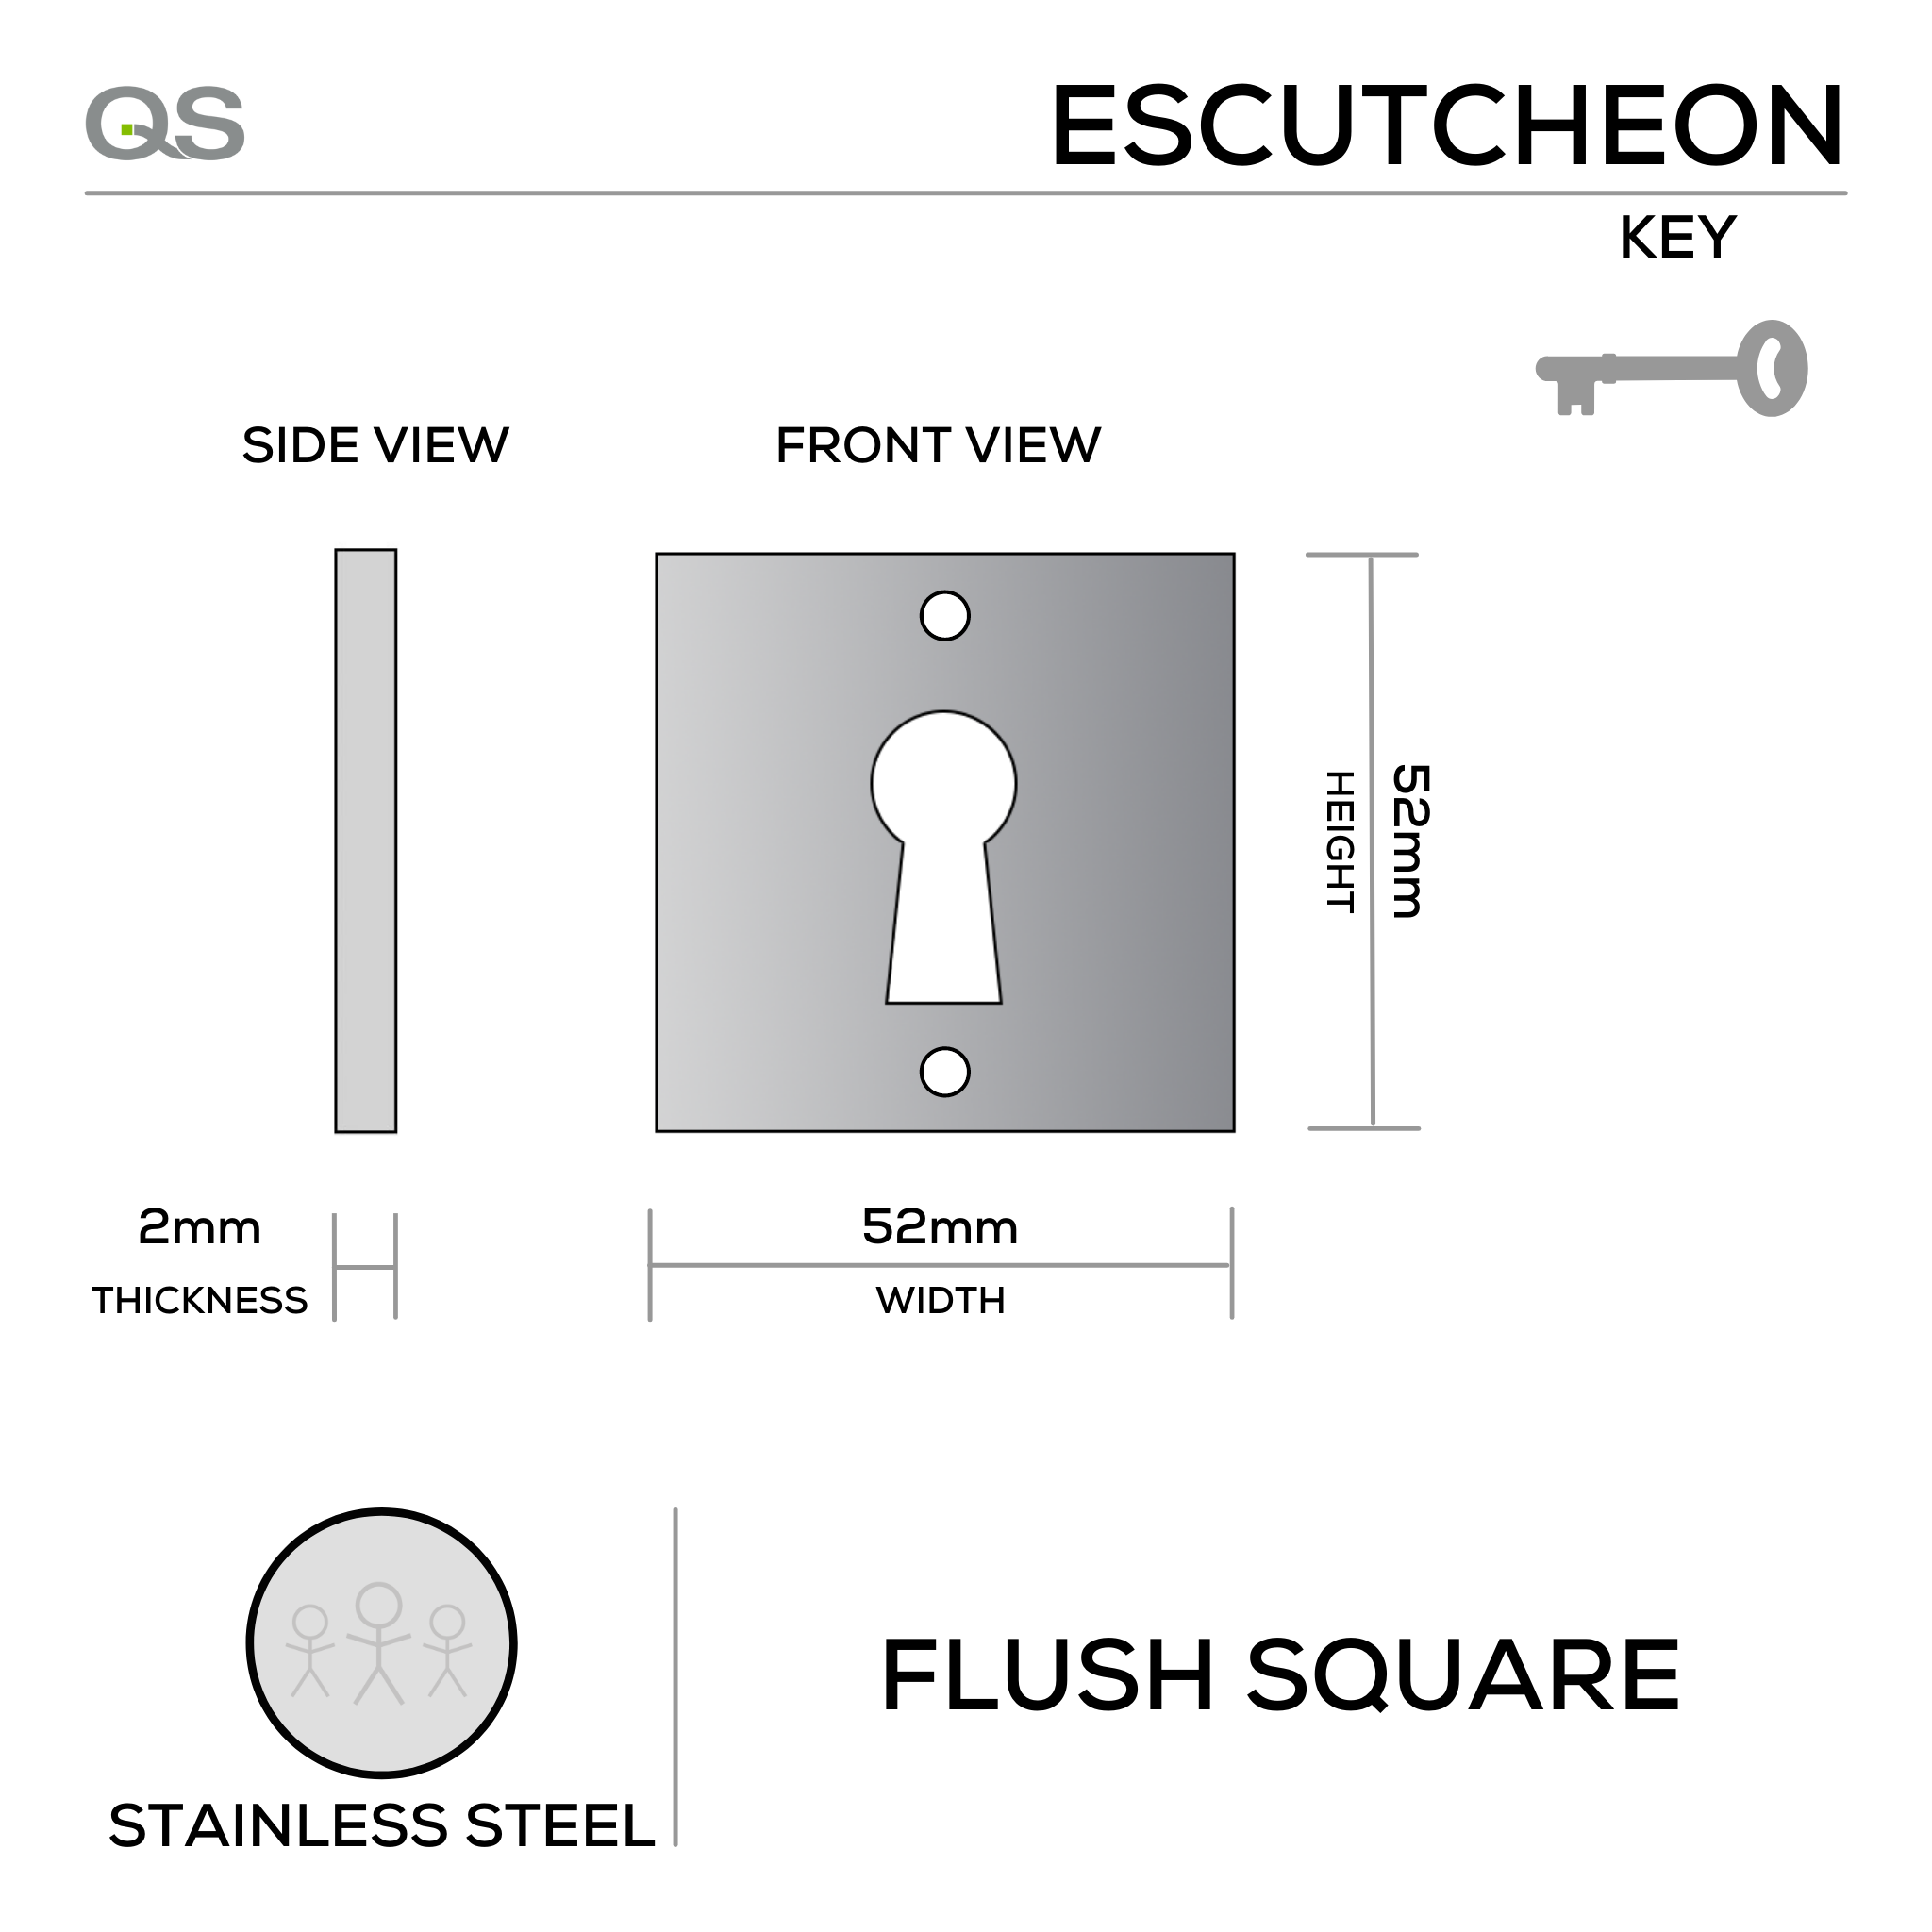 QS4472/FL, Keyhole Escutcheon, Flush Square Rose, 52mm (h) x 52mm (w) x 2mm (t), Stainless Steel, QS